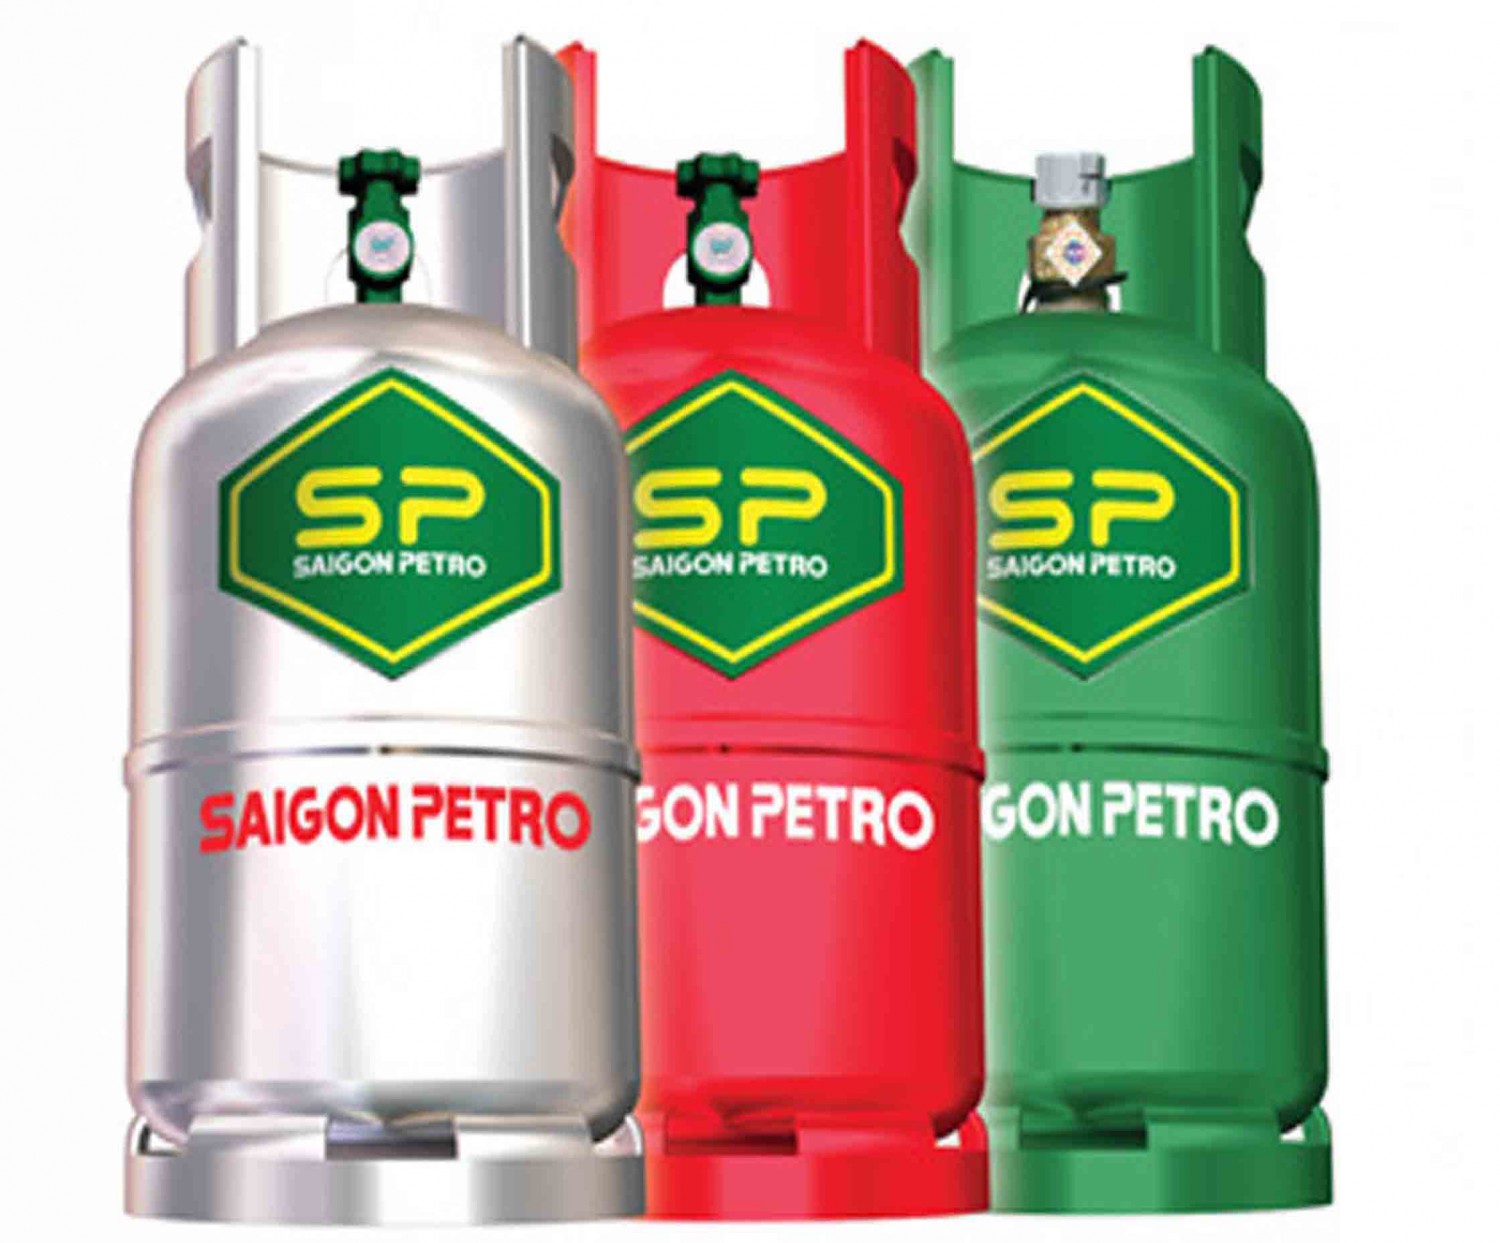 Saigon Petro Gas